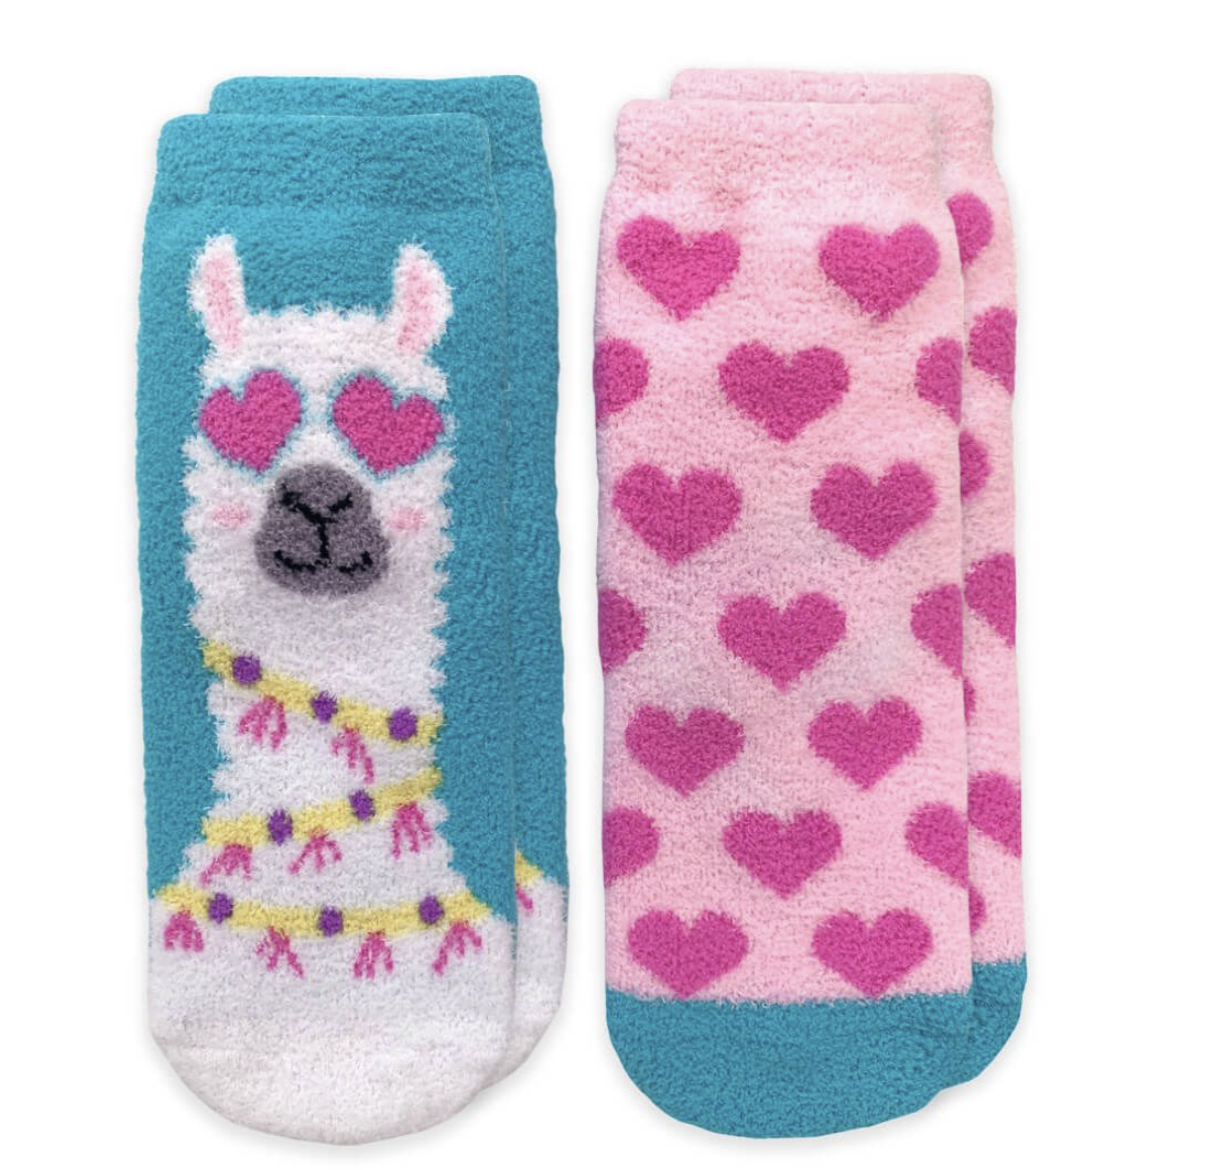 Unicorn/Rainbow Fuzzy Non-Skid Slipper Socks 2 Pair Pack